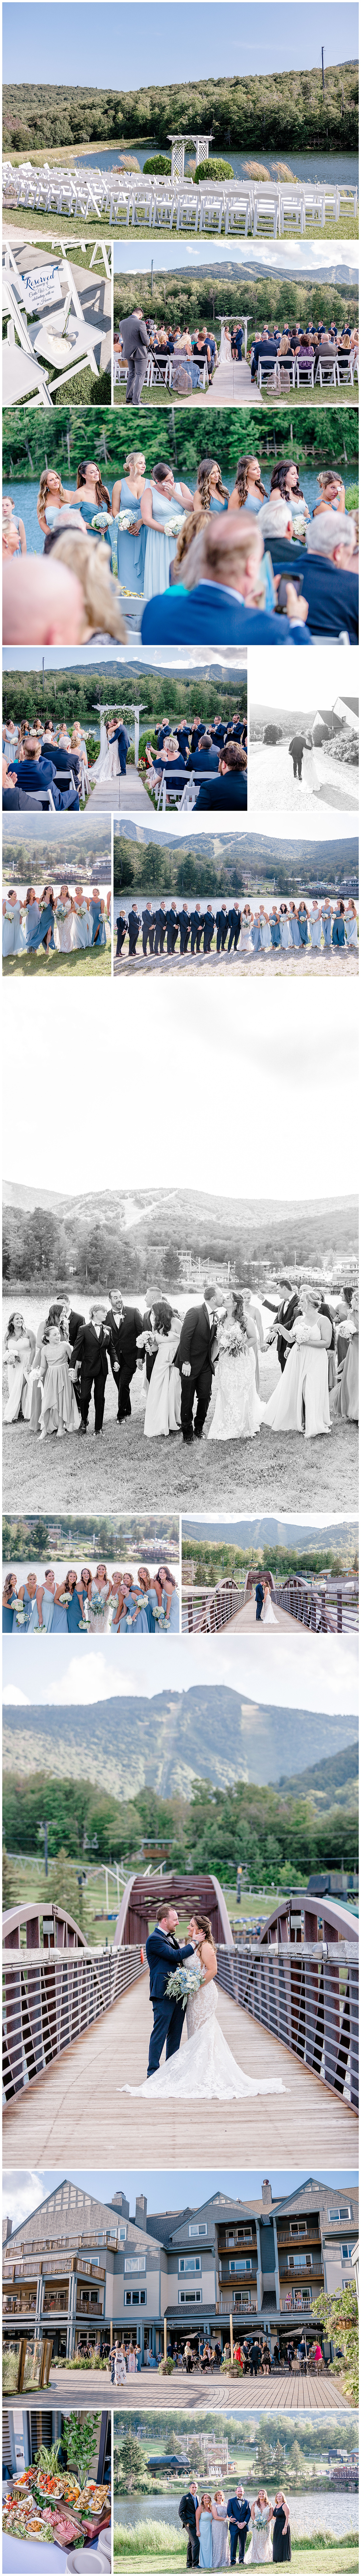 Vermont summer wedding photography 